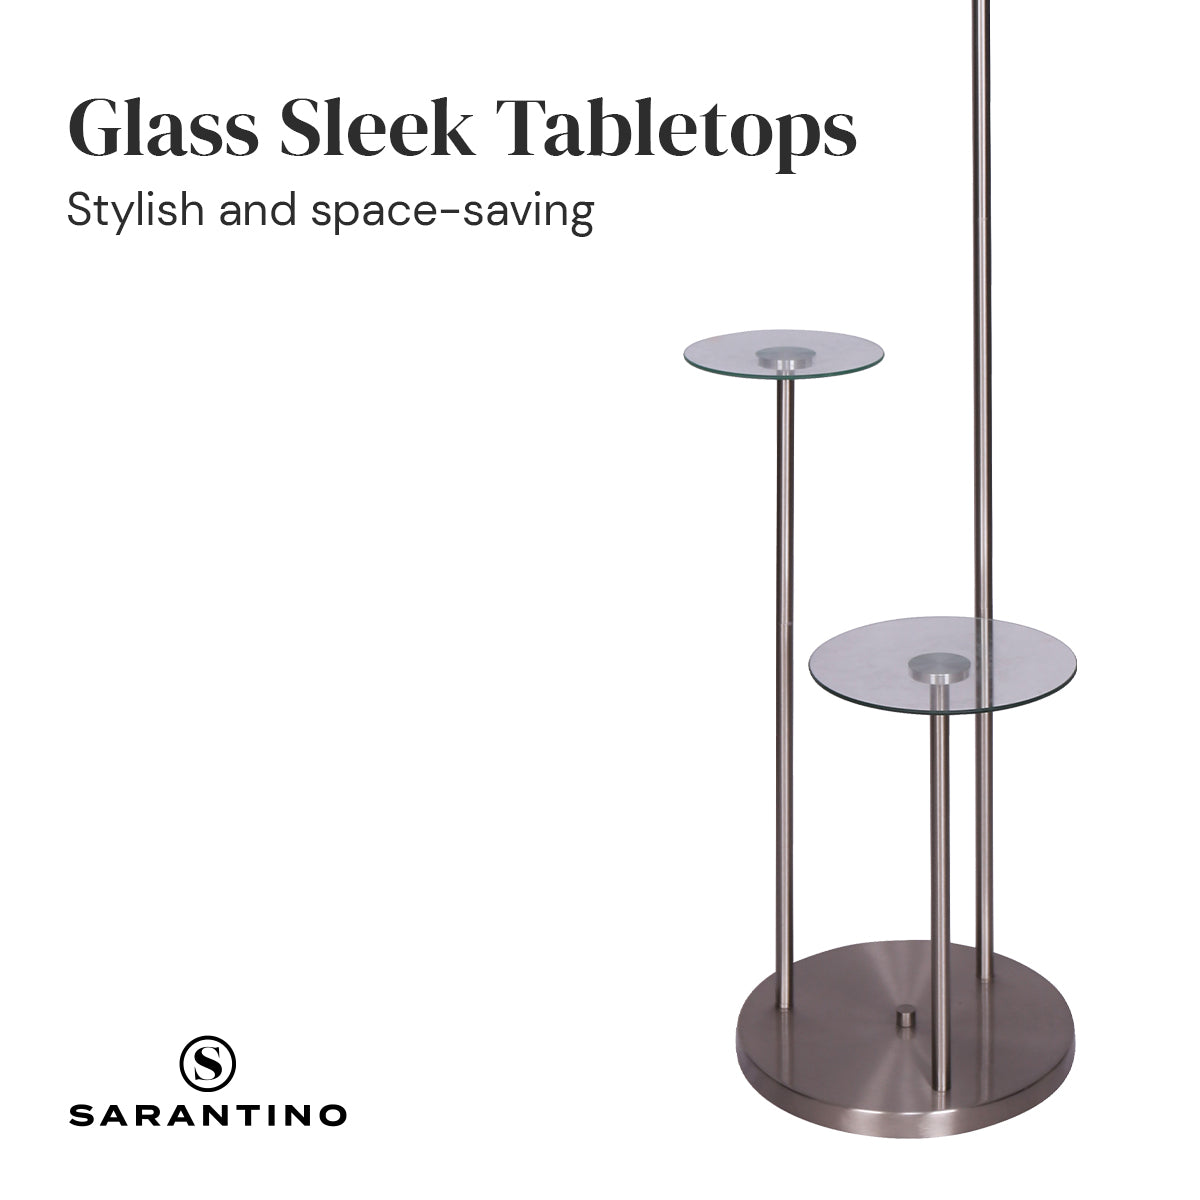 Sarantino Metal Floor Lamp with Glass Shelves - BM House & Garden